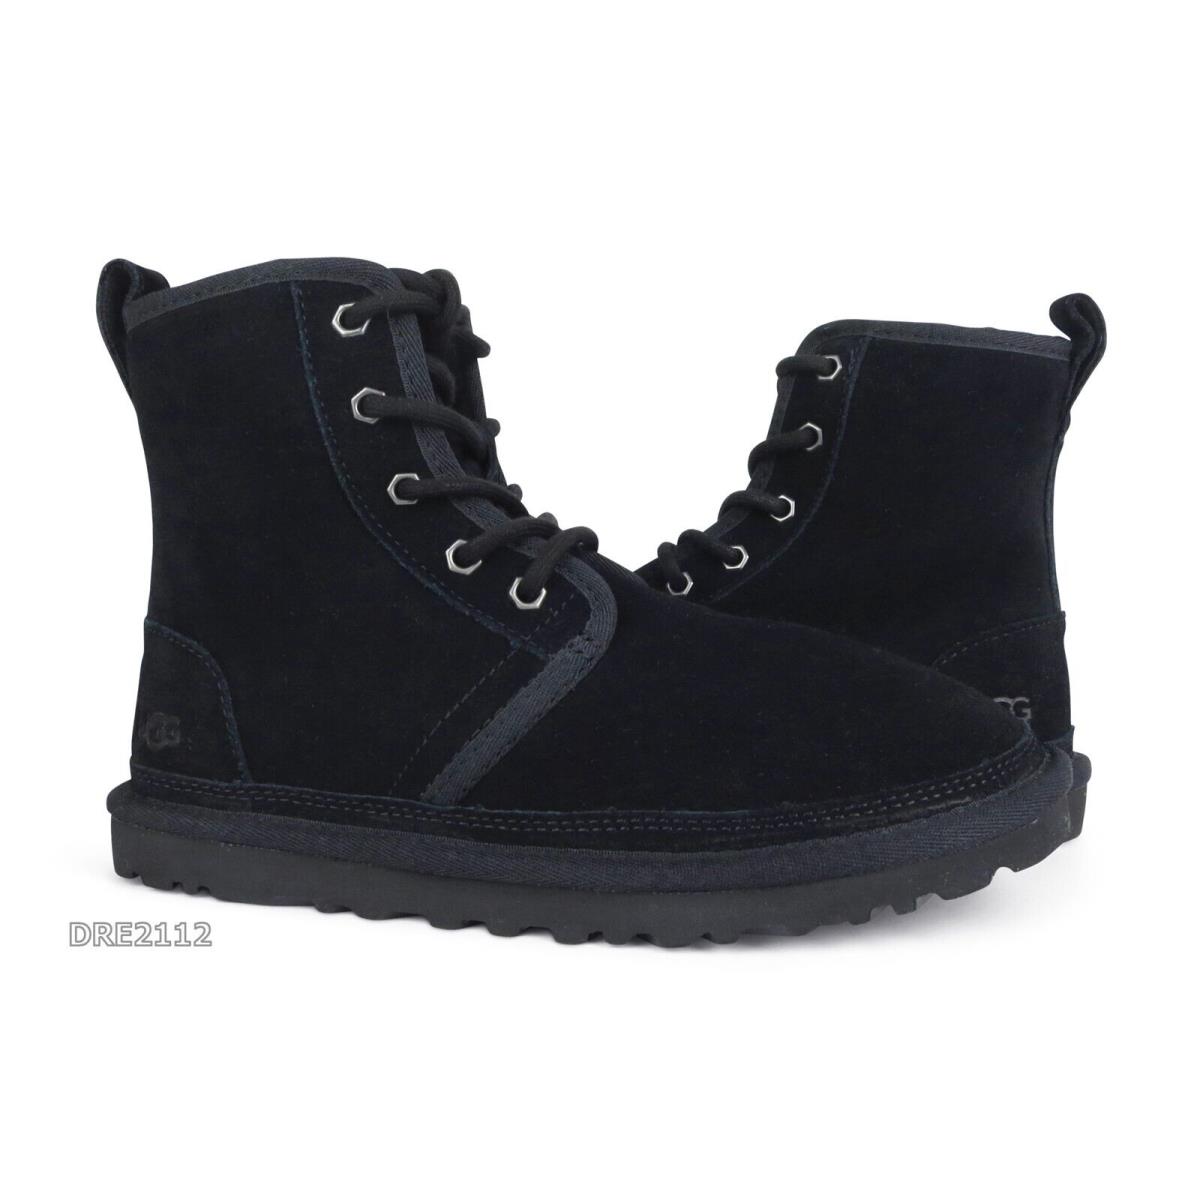 Ugg Neumel High Black Suede Fur Shoes Womens Size 8 -nib - Black